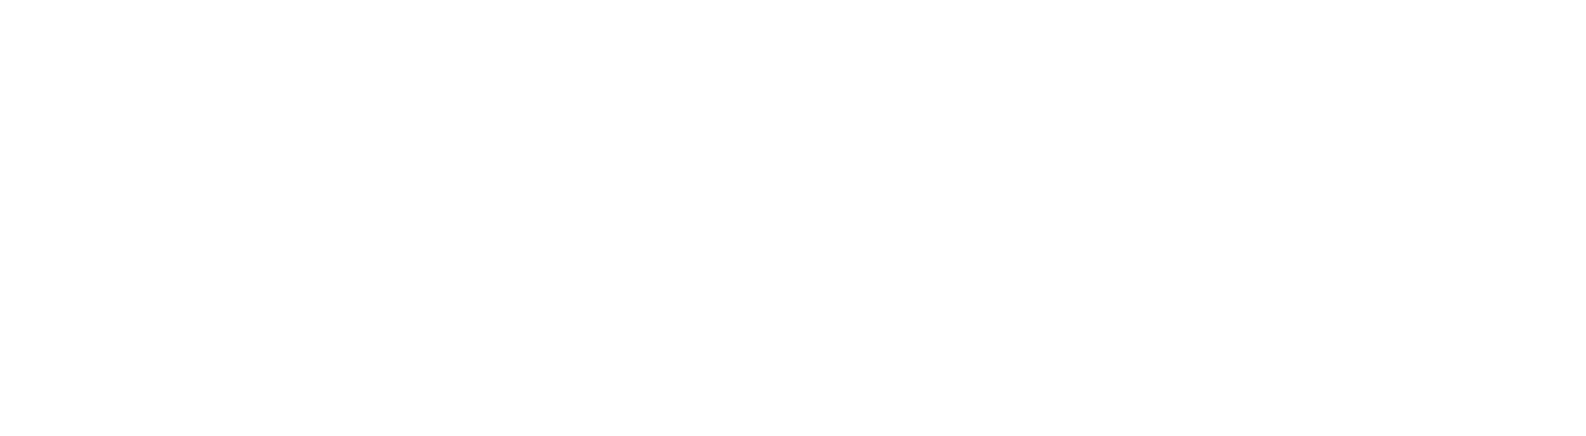 Neptune Wellness Solutions
 logo large for dark backgrounds (transparent PNG)